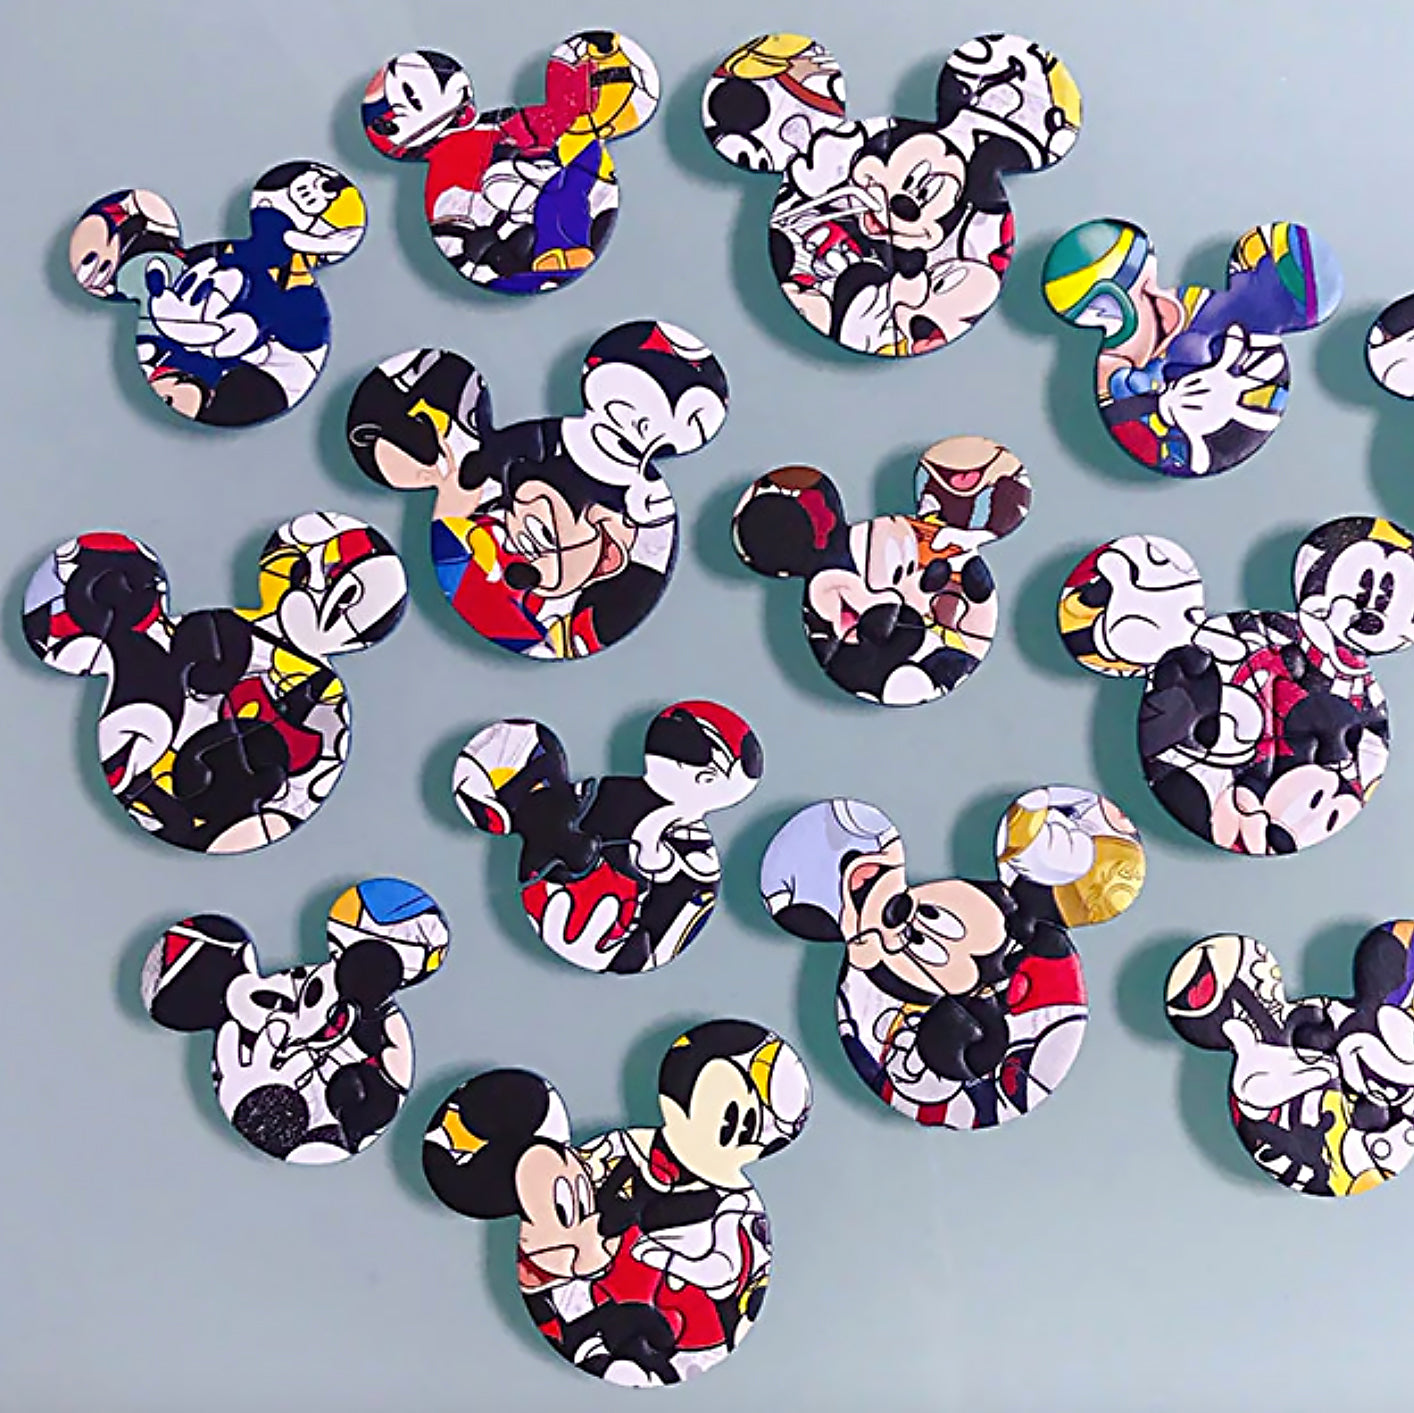 Unique Mickey Mouse shaped puzzle pieces